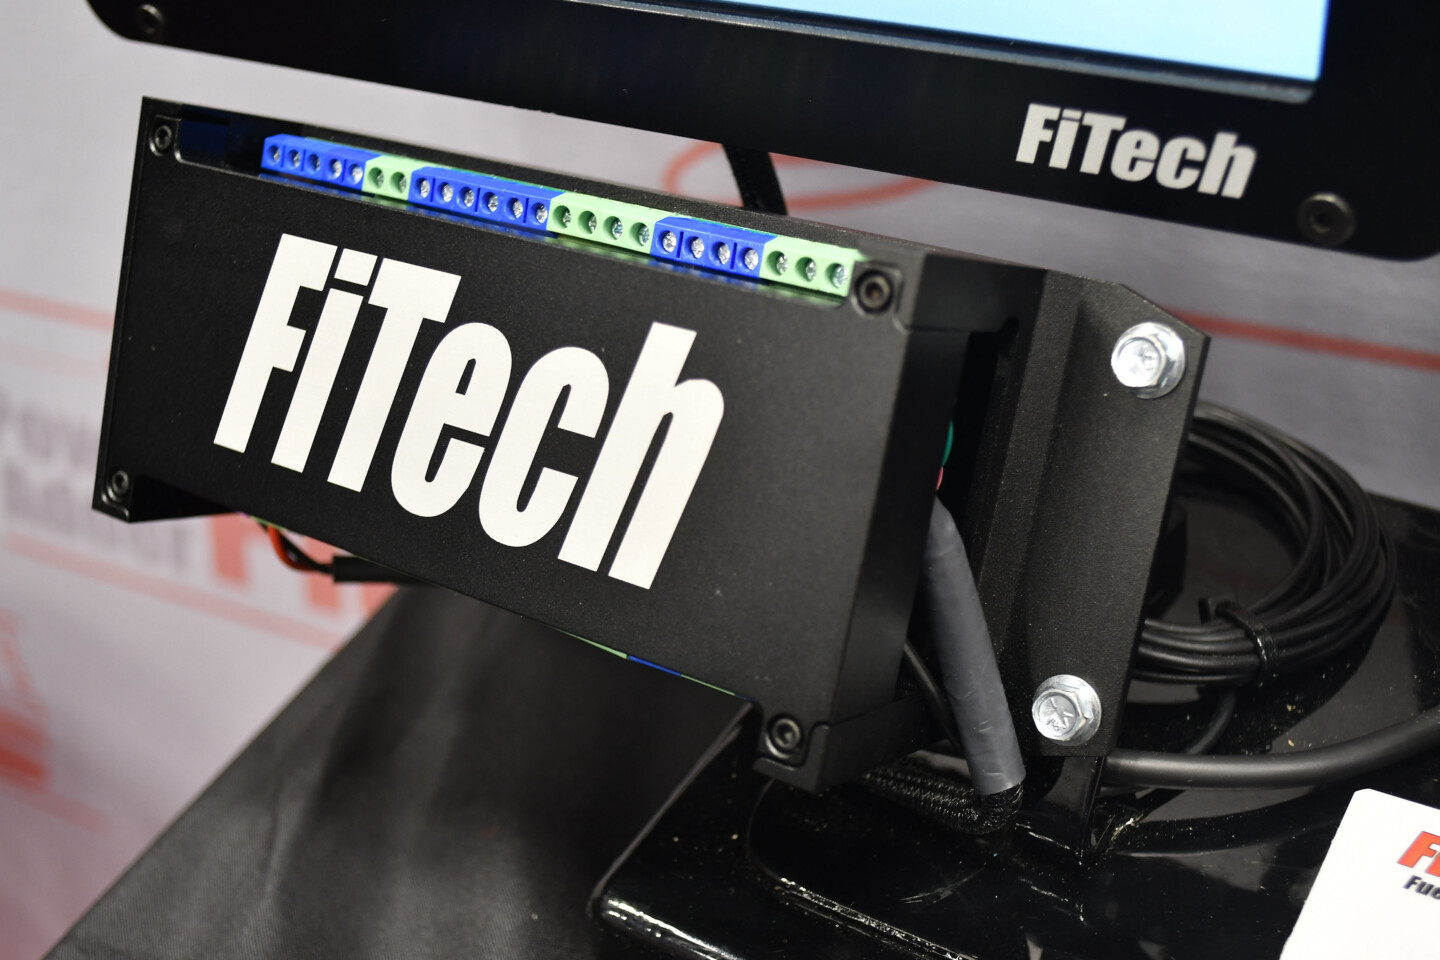 FiTech LCD display hub